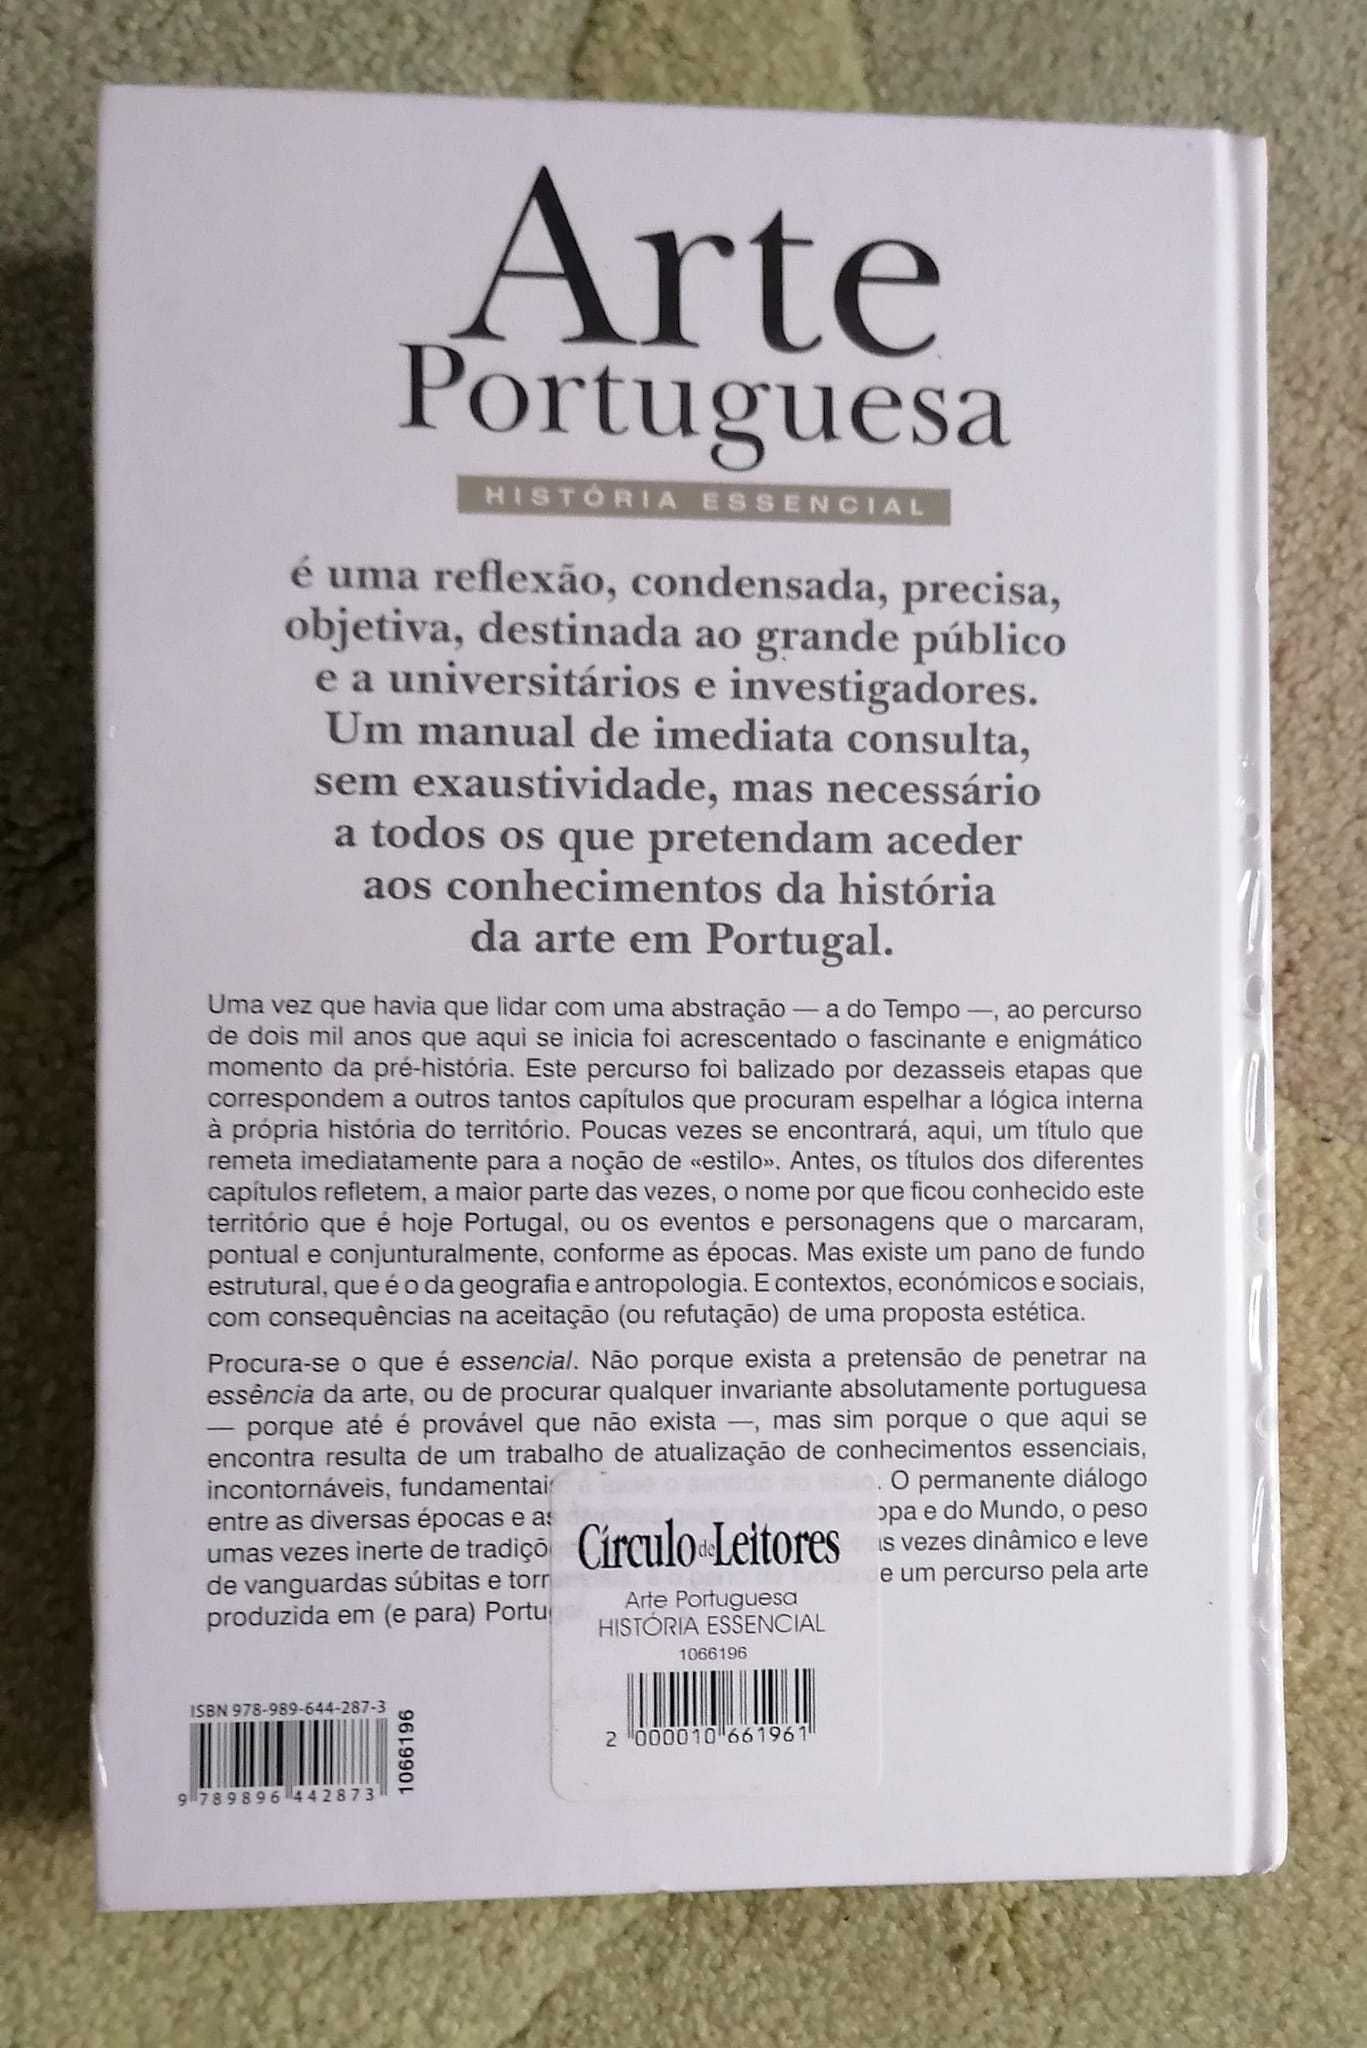 Arte Portuguesa - Paulo Pereira